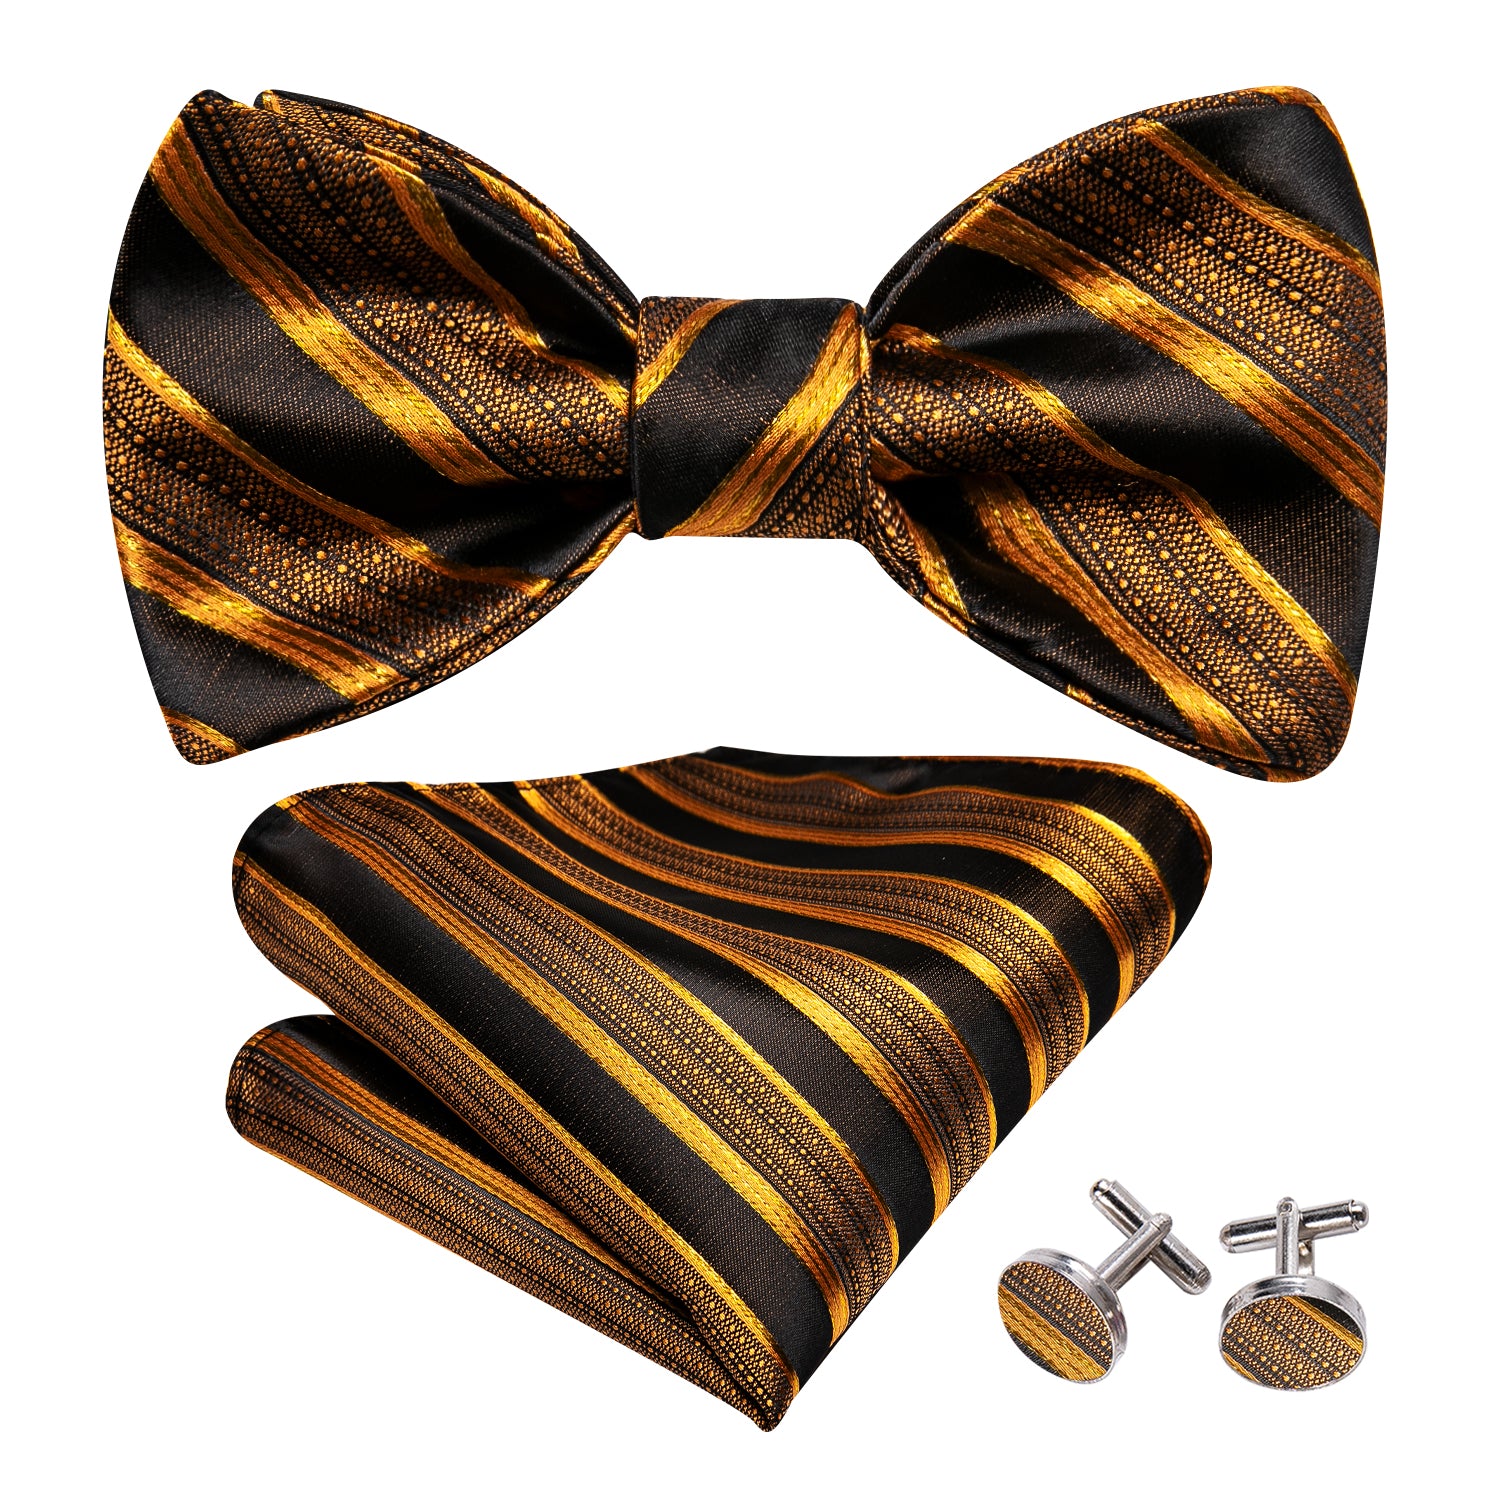  Black Gold Striped Bow Tie Hanky Cufflinks Set